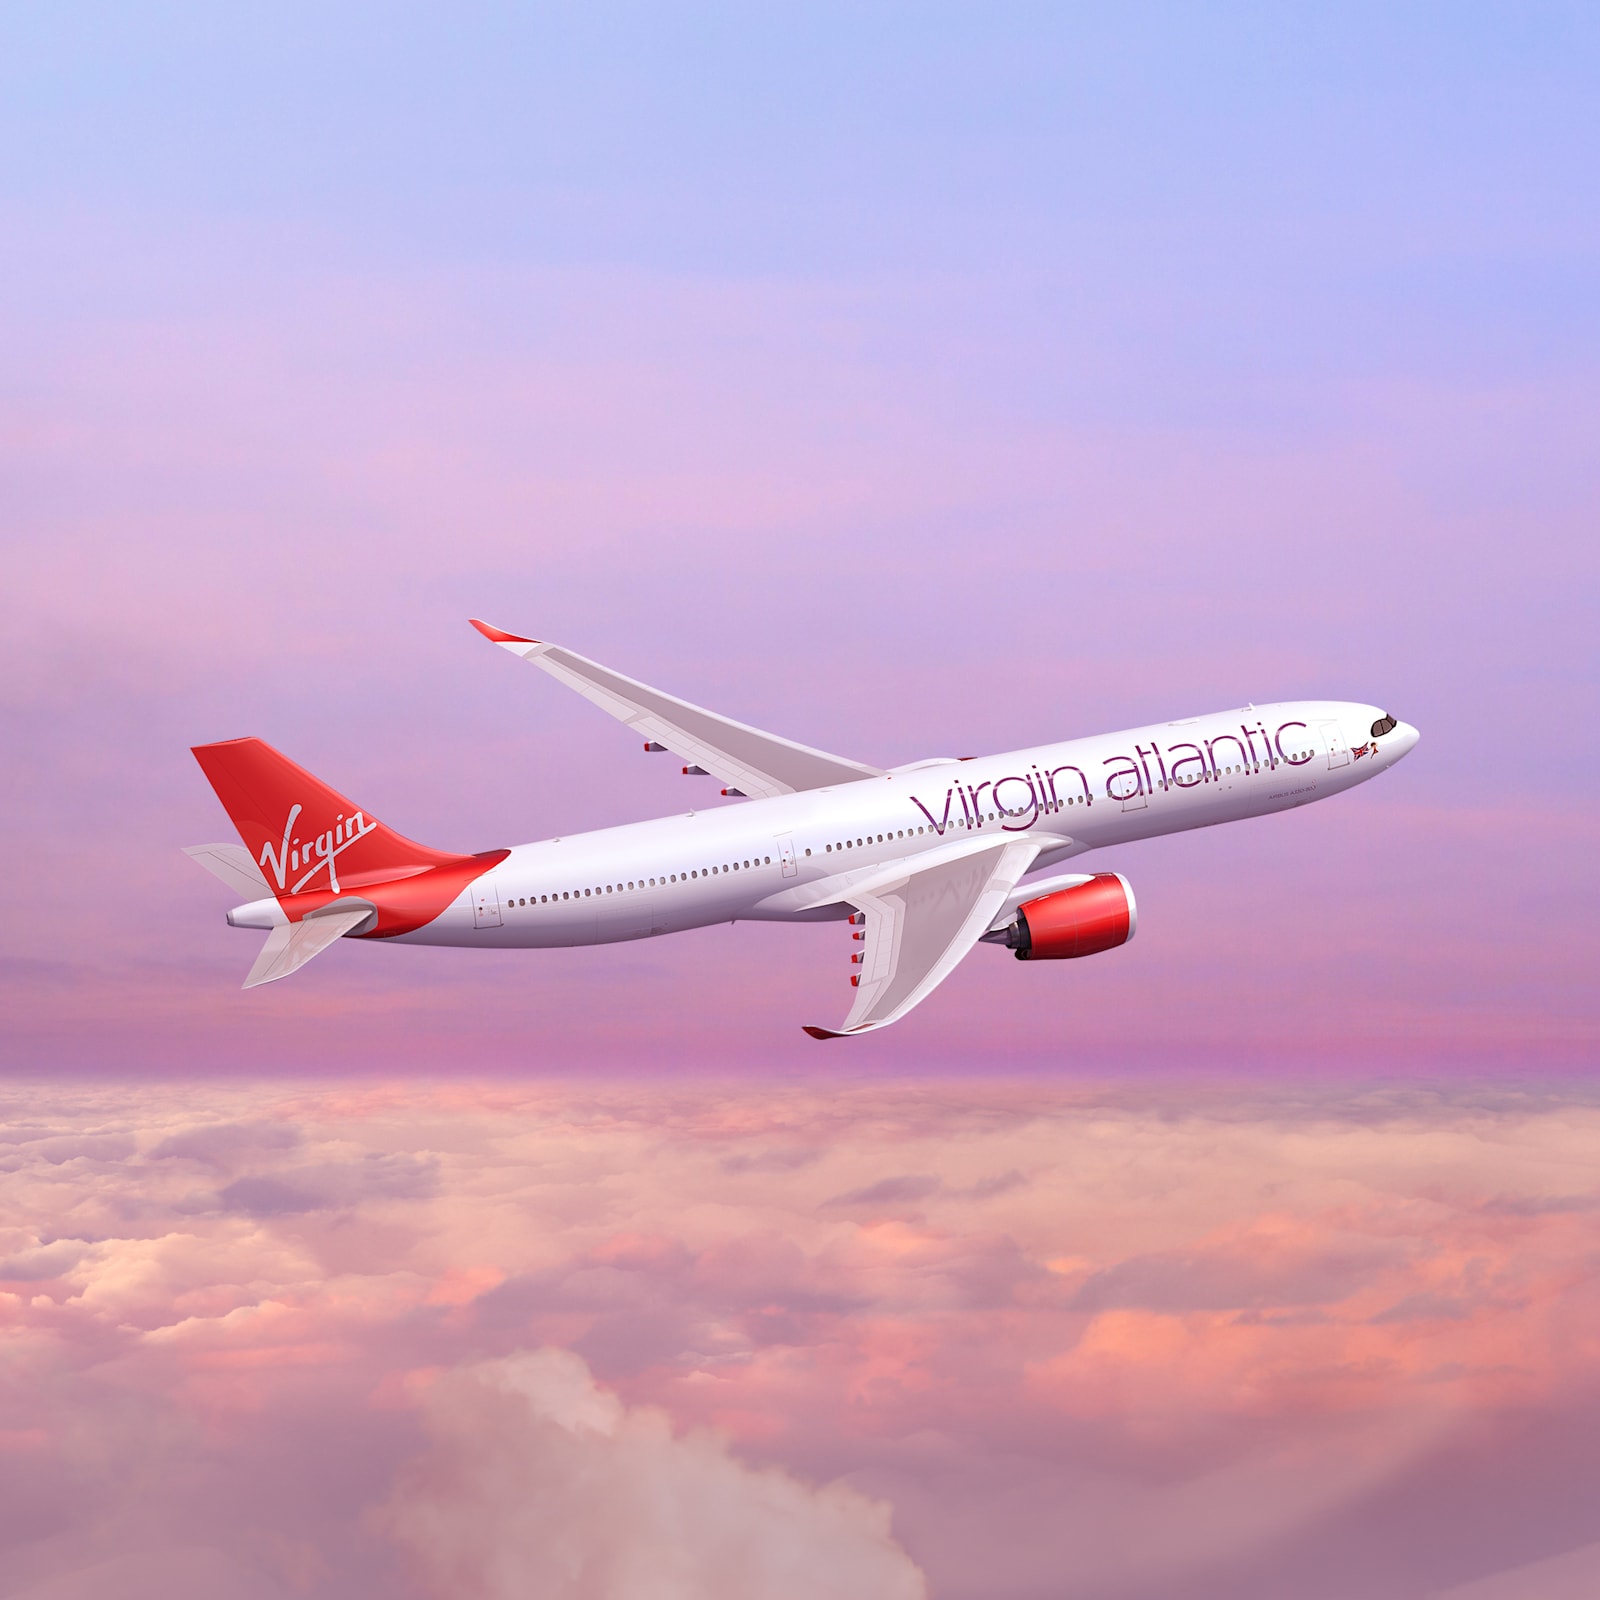 Virgin Atlantic to restart services to Tobago; ends Barbados services